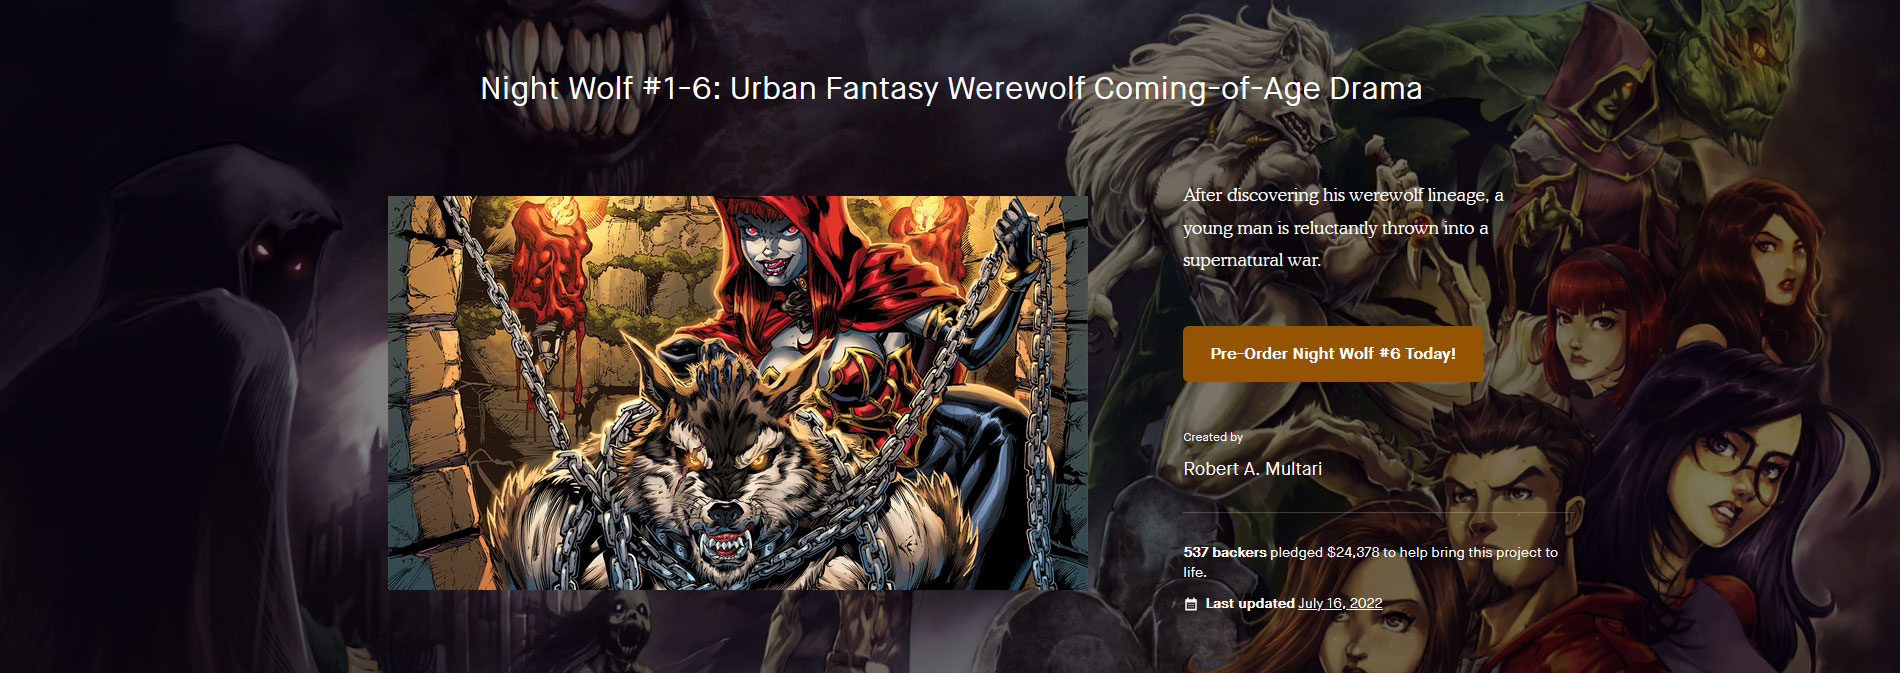 Night Wolf #1-6: Urban Fantasy Werewolf Coming of Age Drama Kickstarter